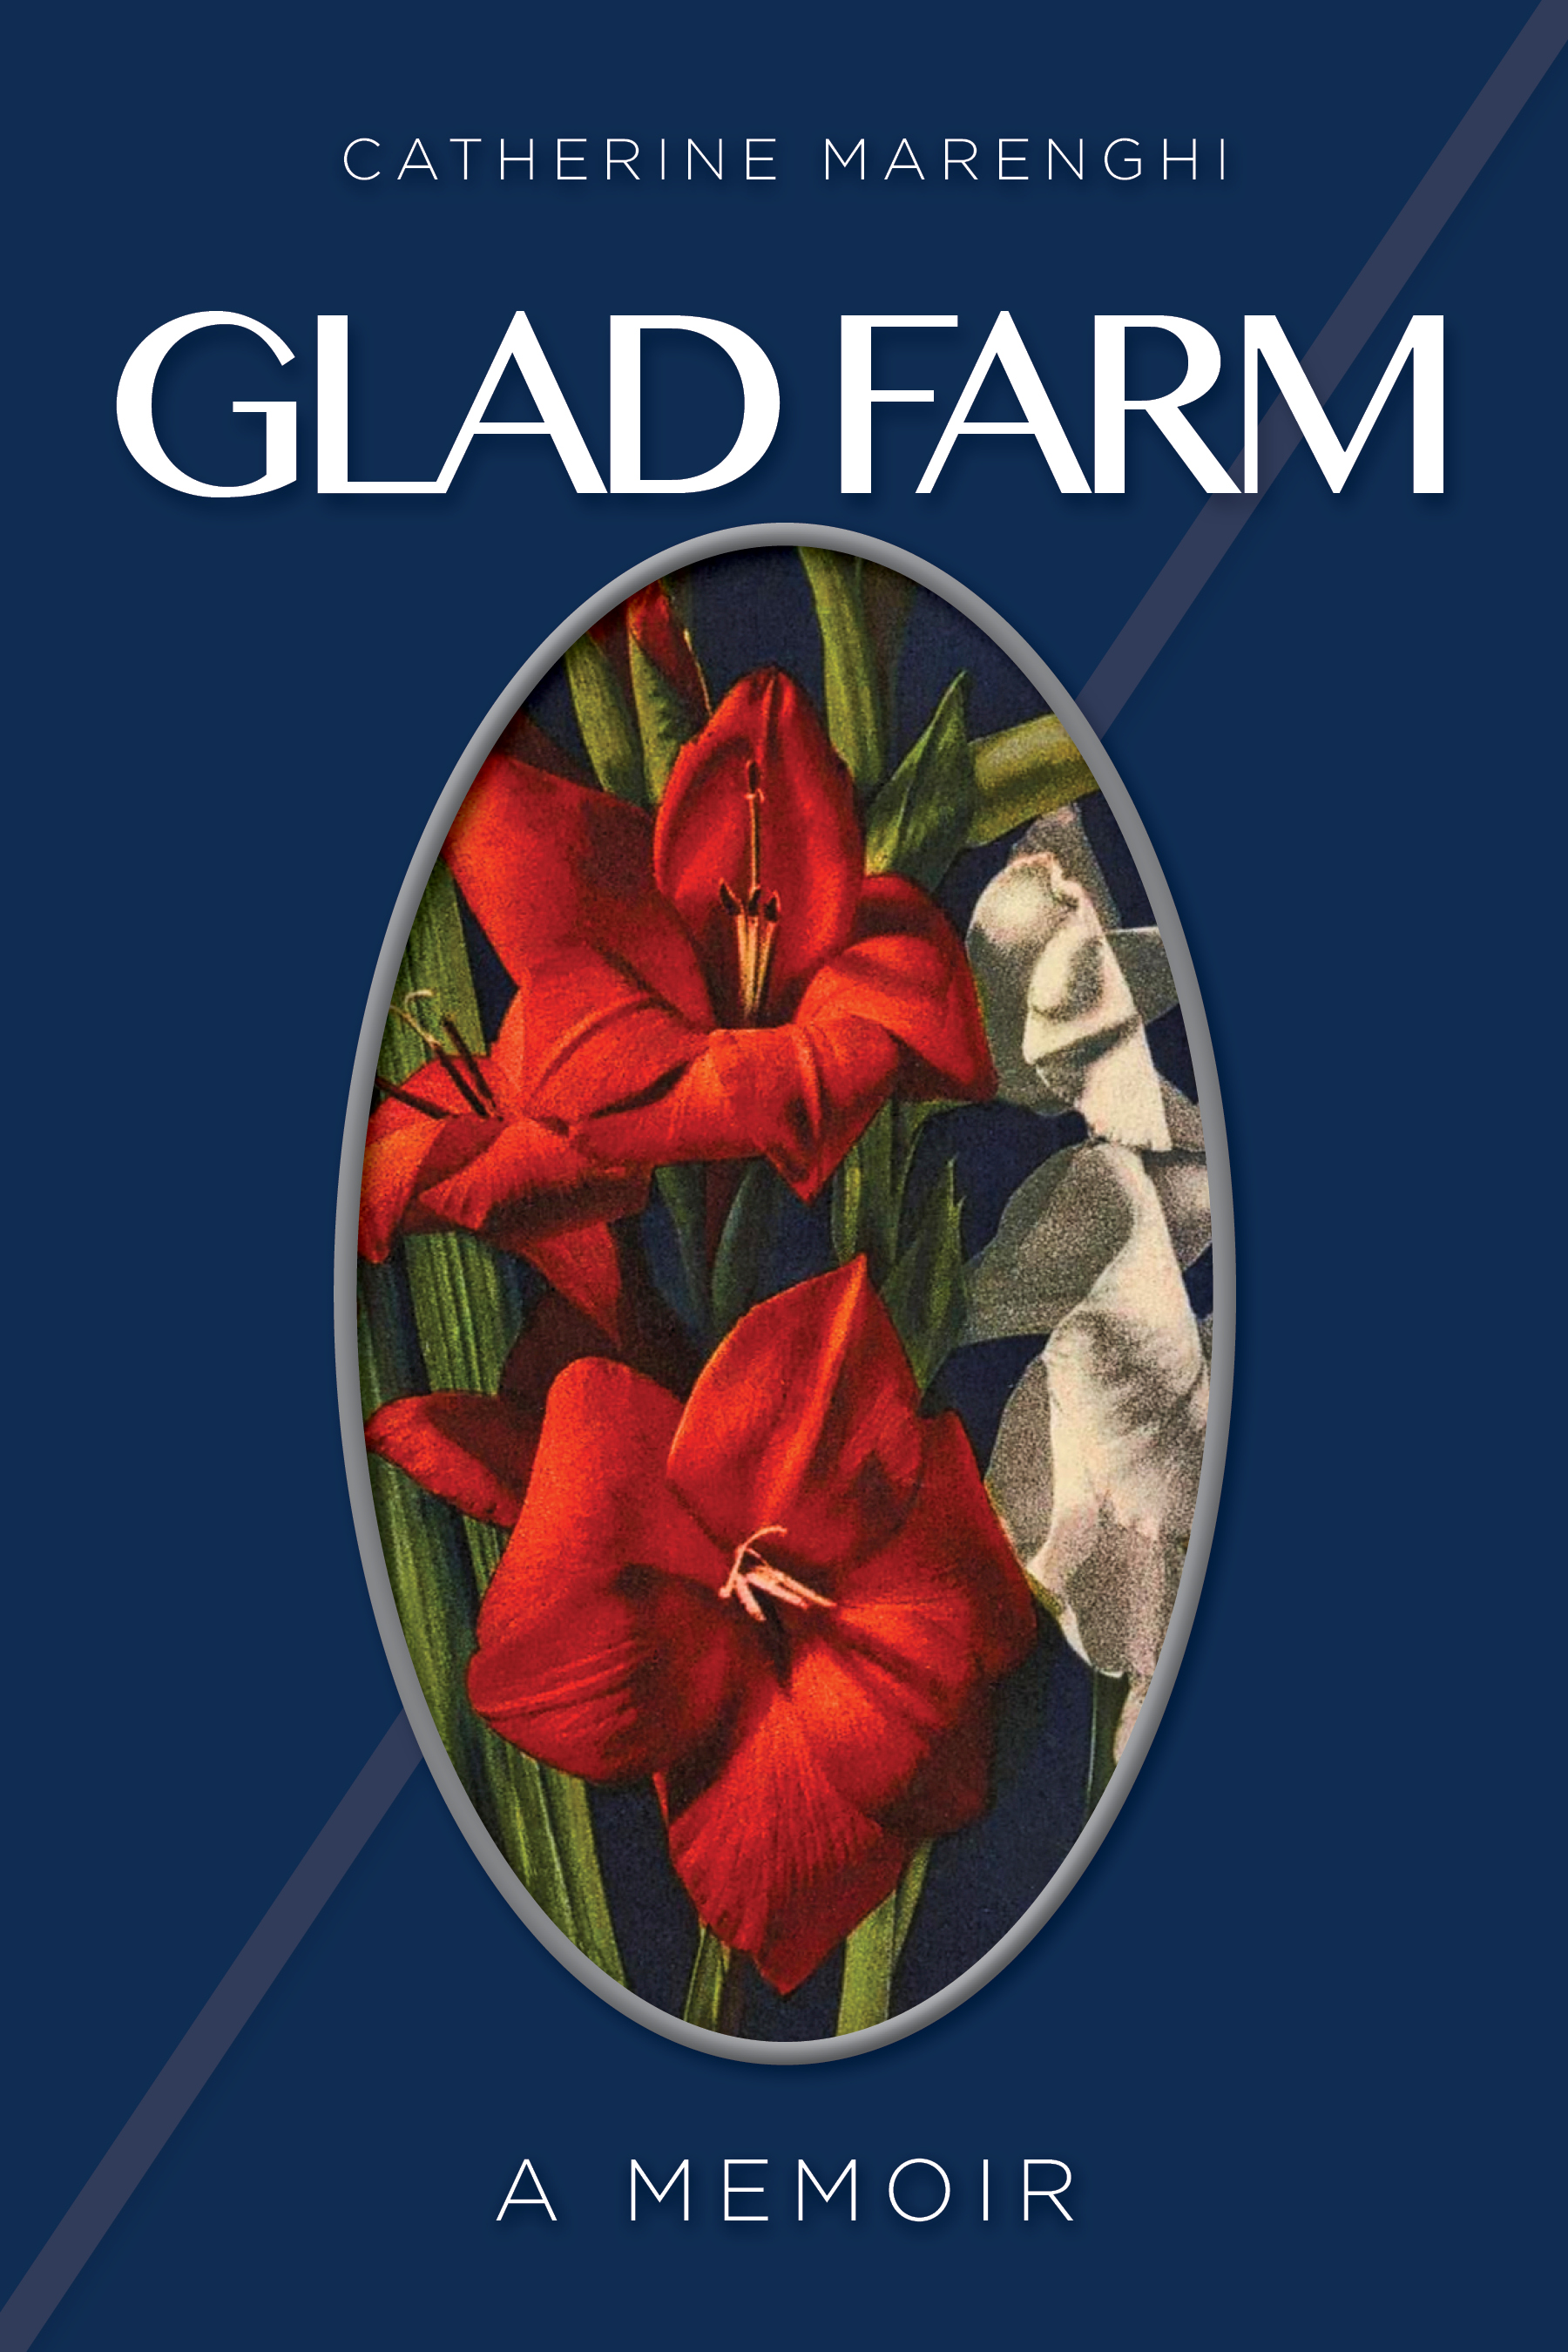 GLAD FARM: revised cover concept #3